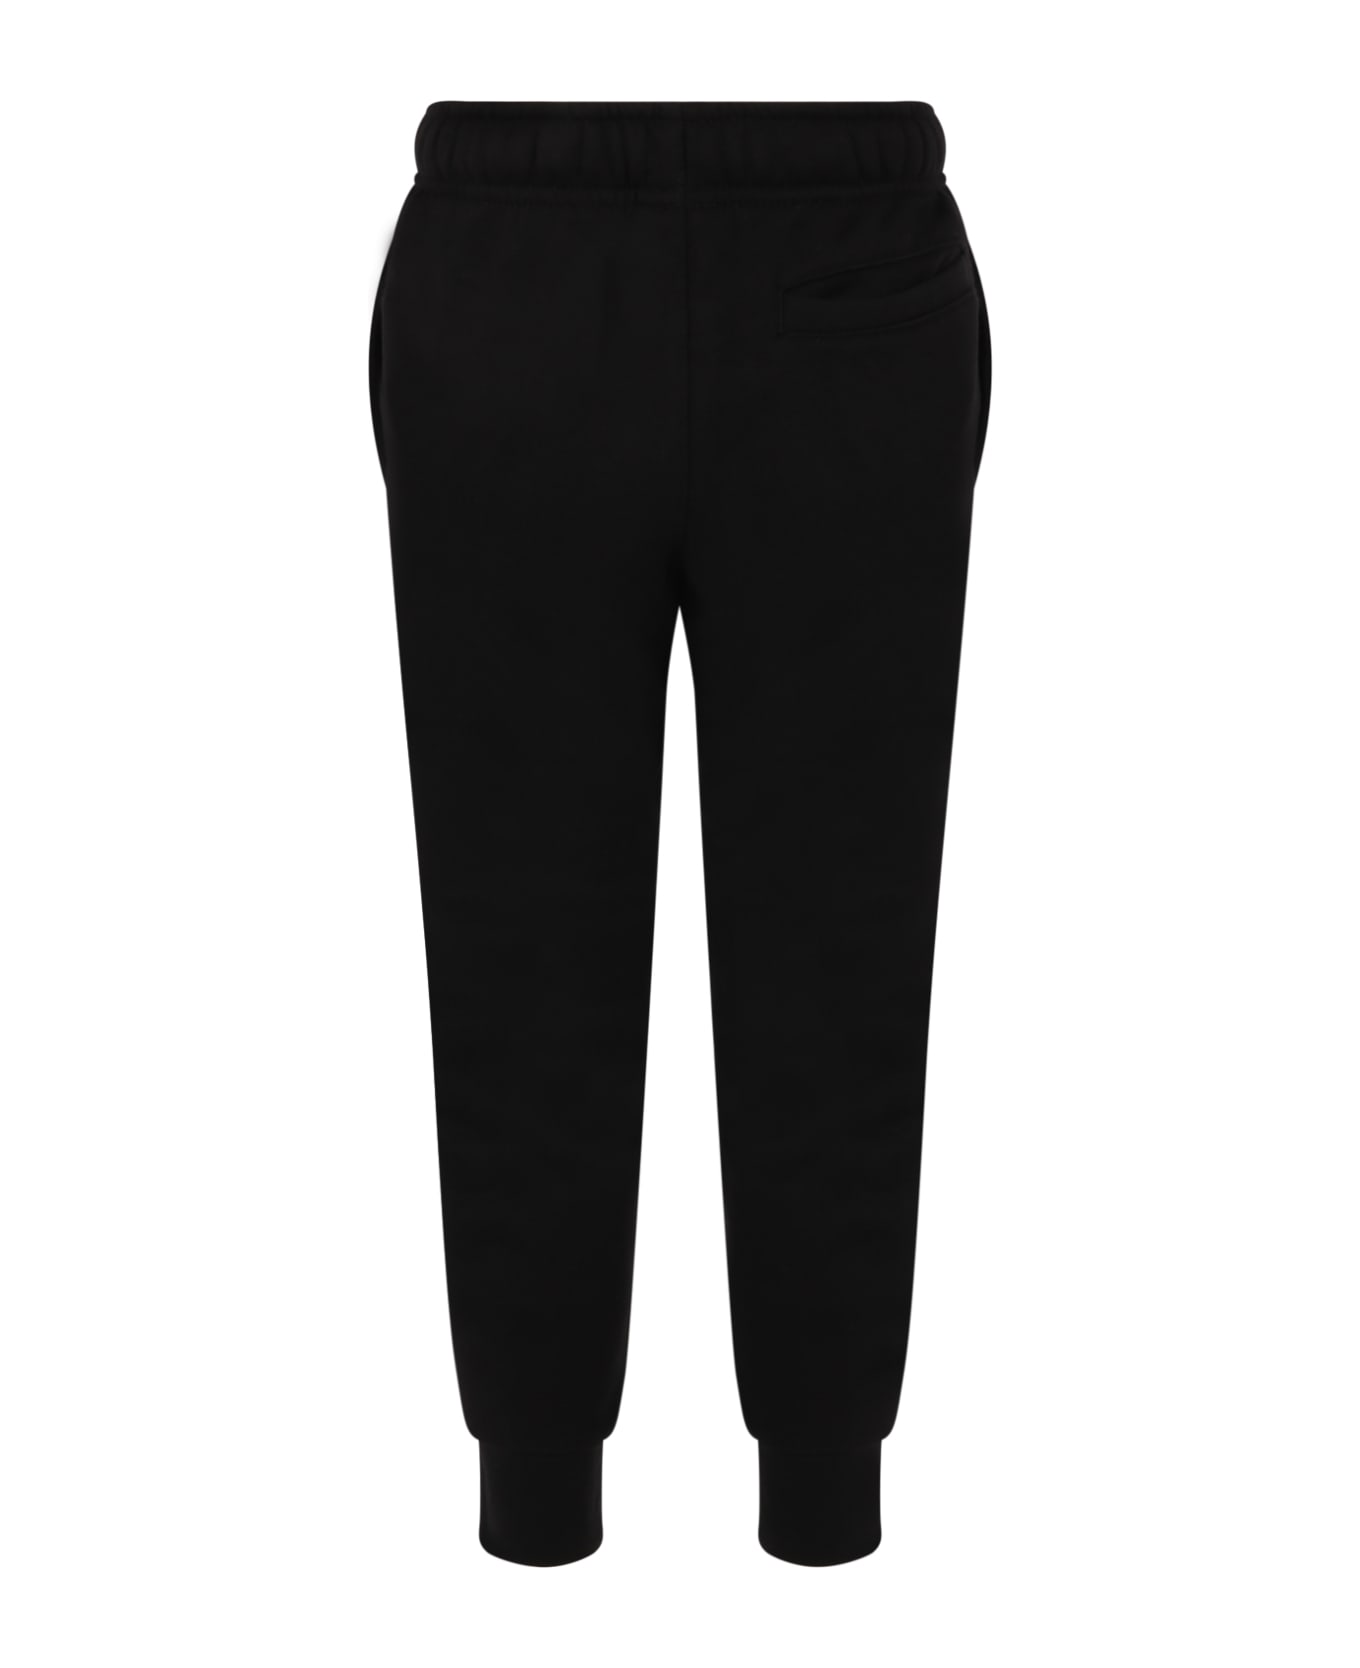 Nike Black Sweatpant For Kids With Logo - Black